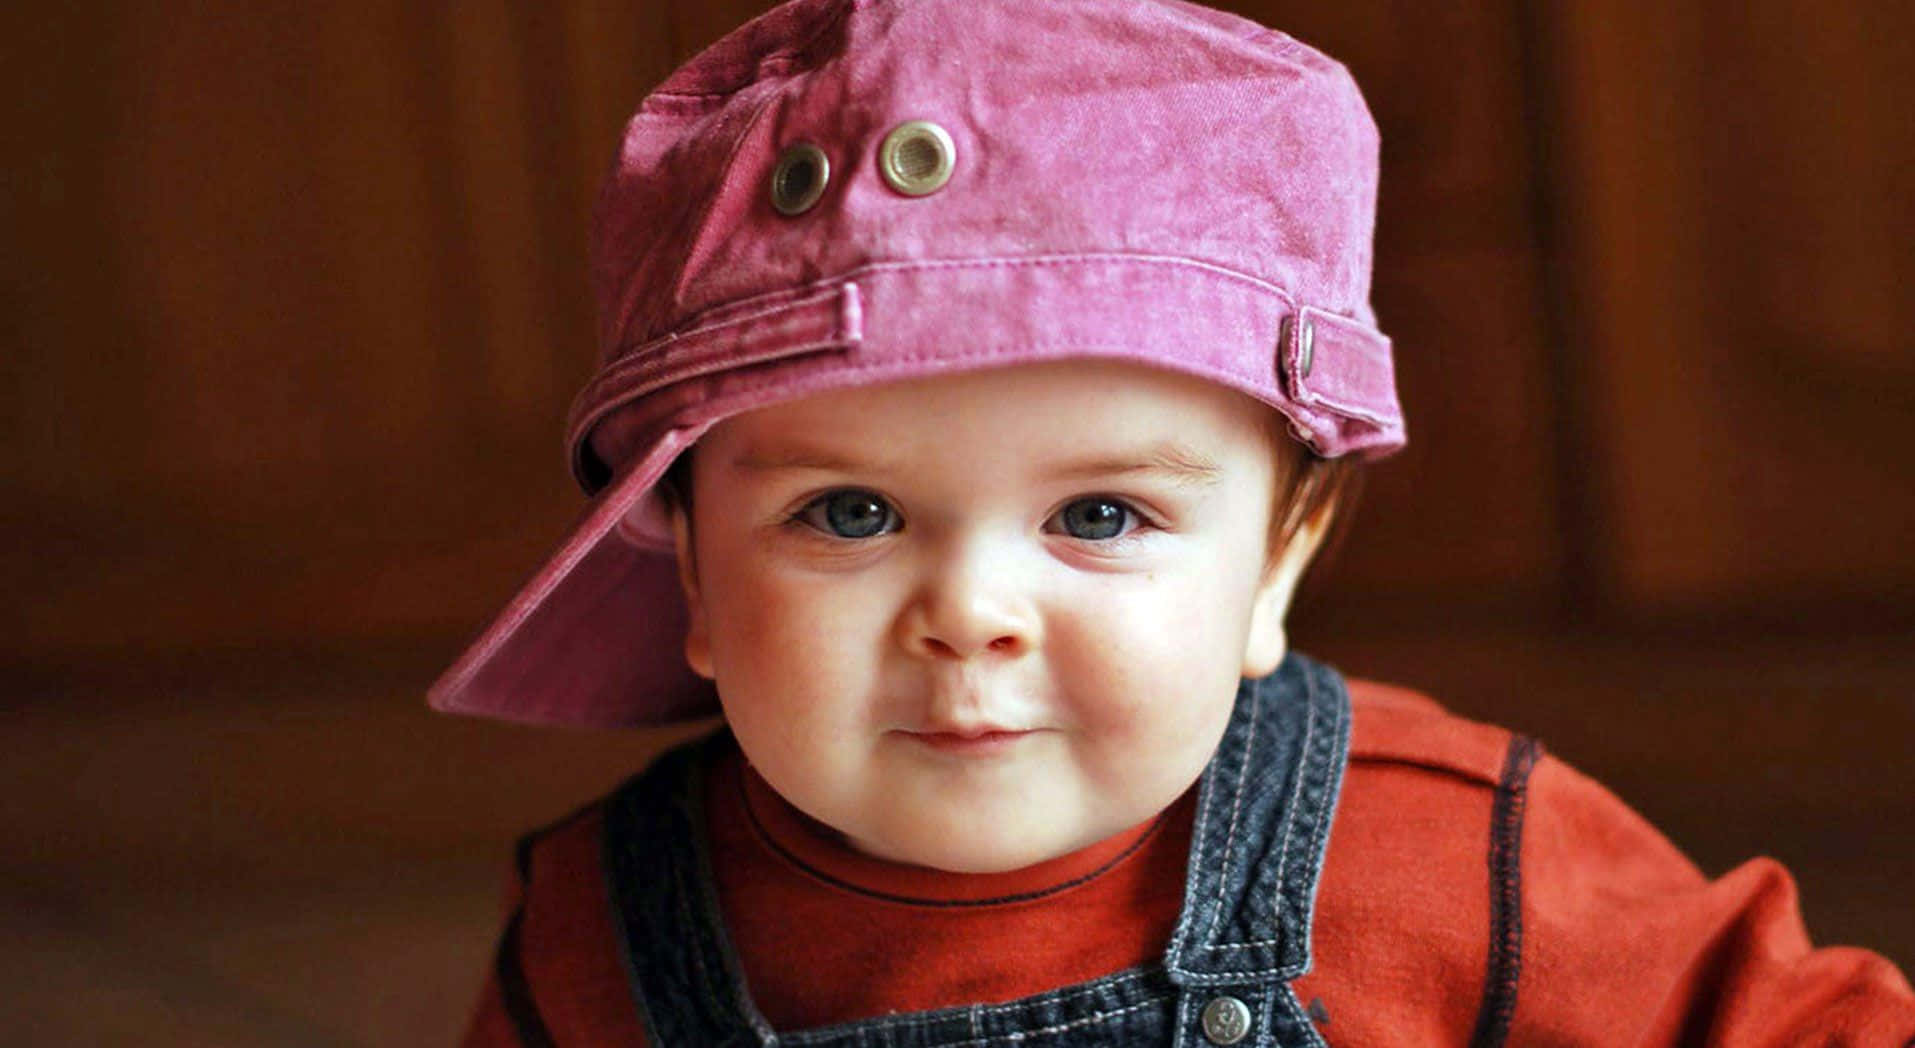 Cute Baby Wearing A Cap